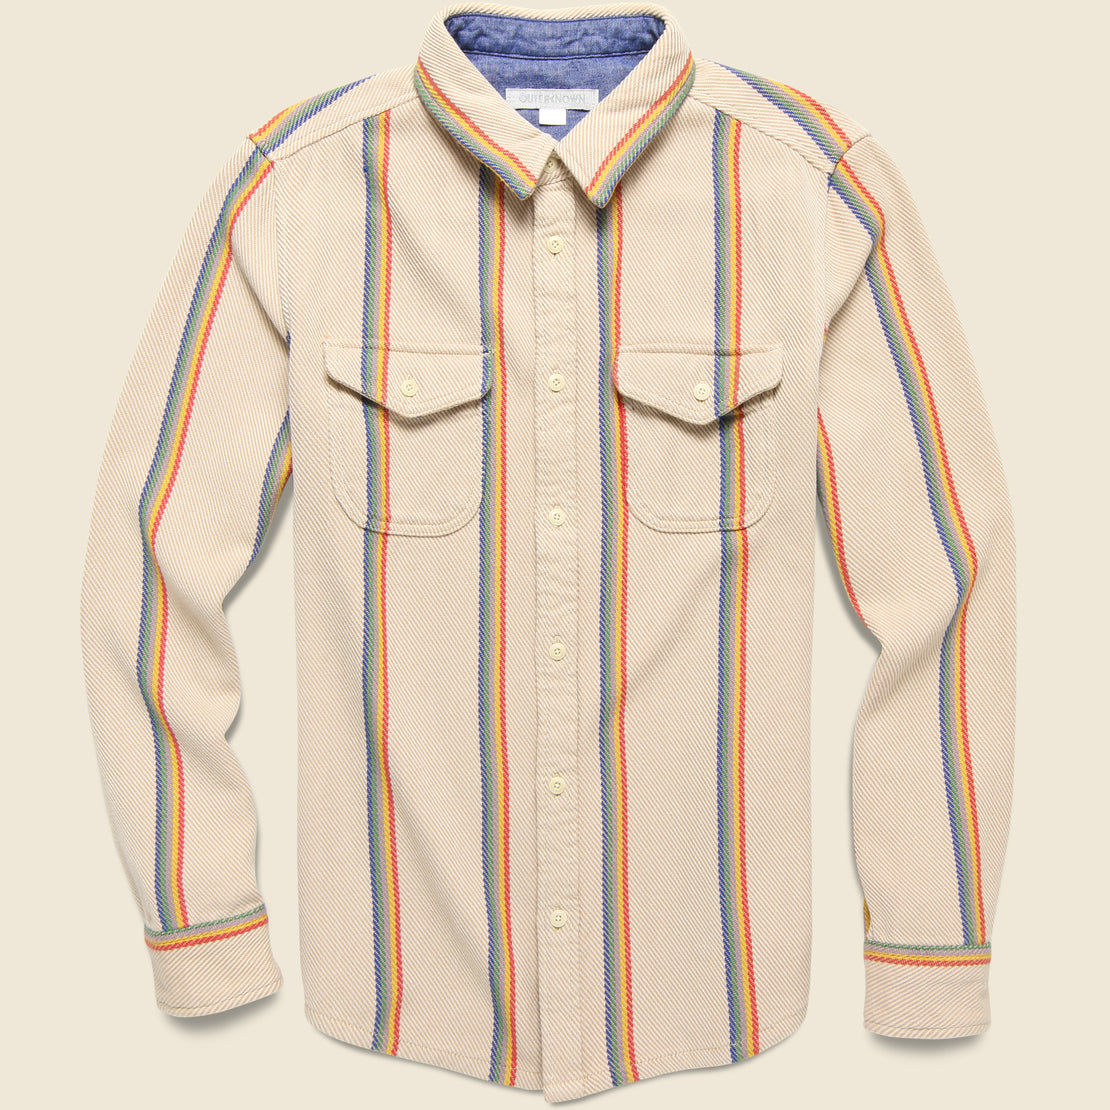 Outerknown Blanket Shirt - Wheat Rainbow Stripe